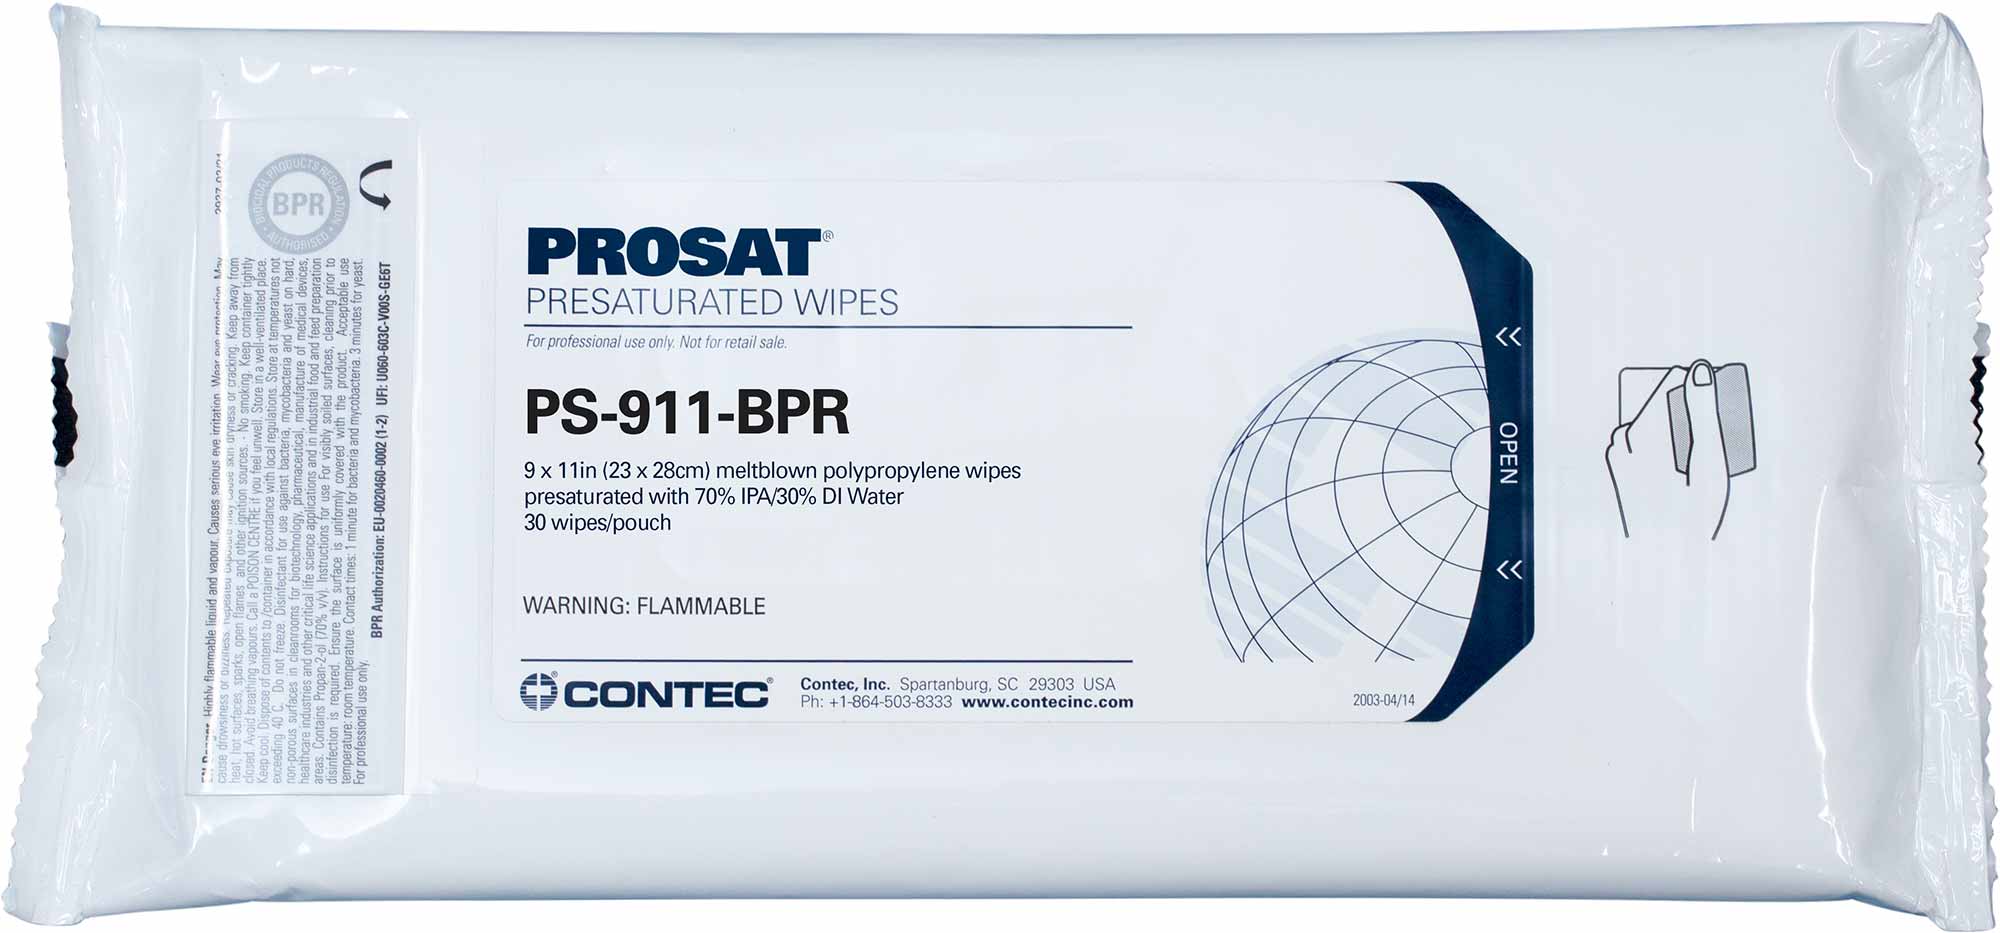 Reinraumtuch PROSAT PS-911-BPR